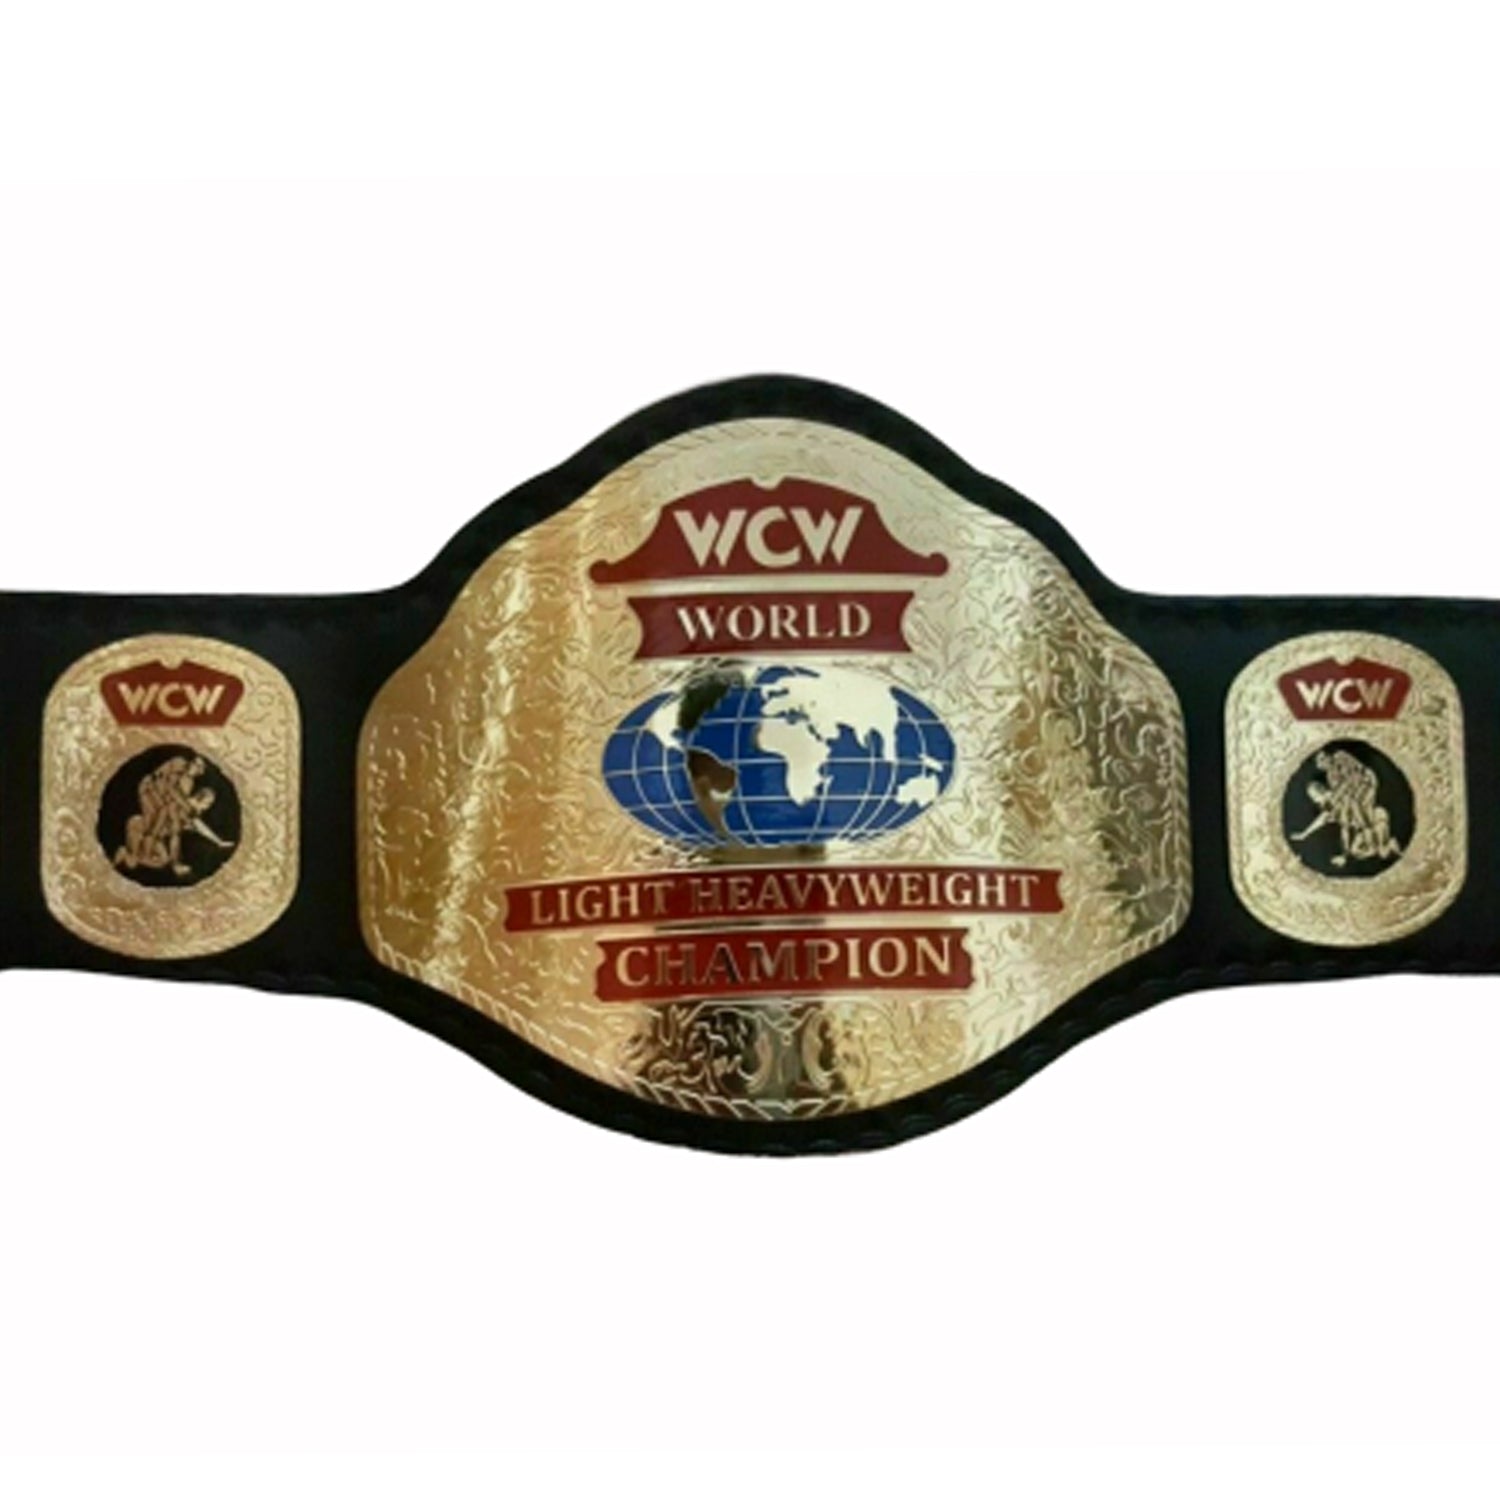 WCW WORLD Light Heavyweight Championship Title Belt – Champions Title Belts